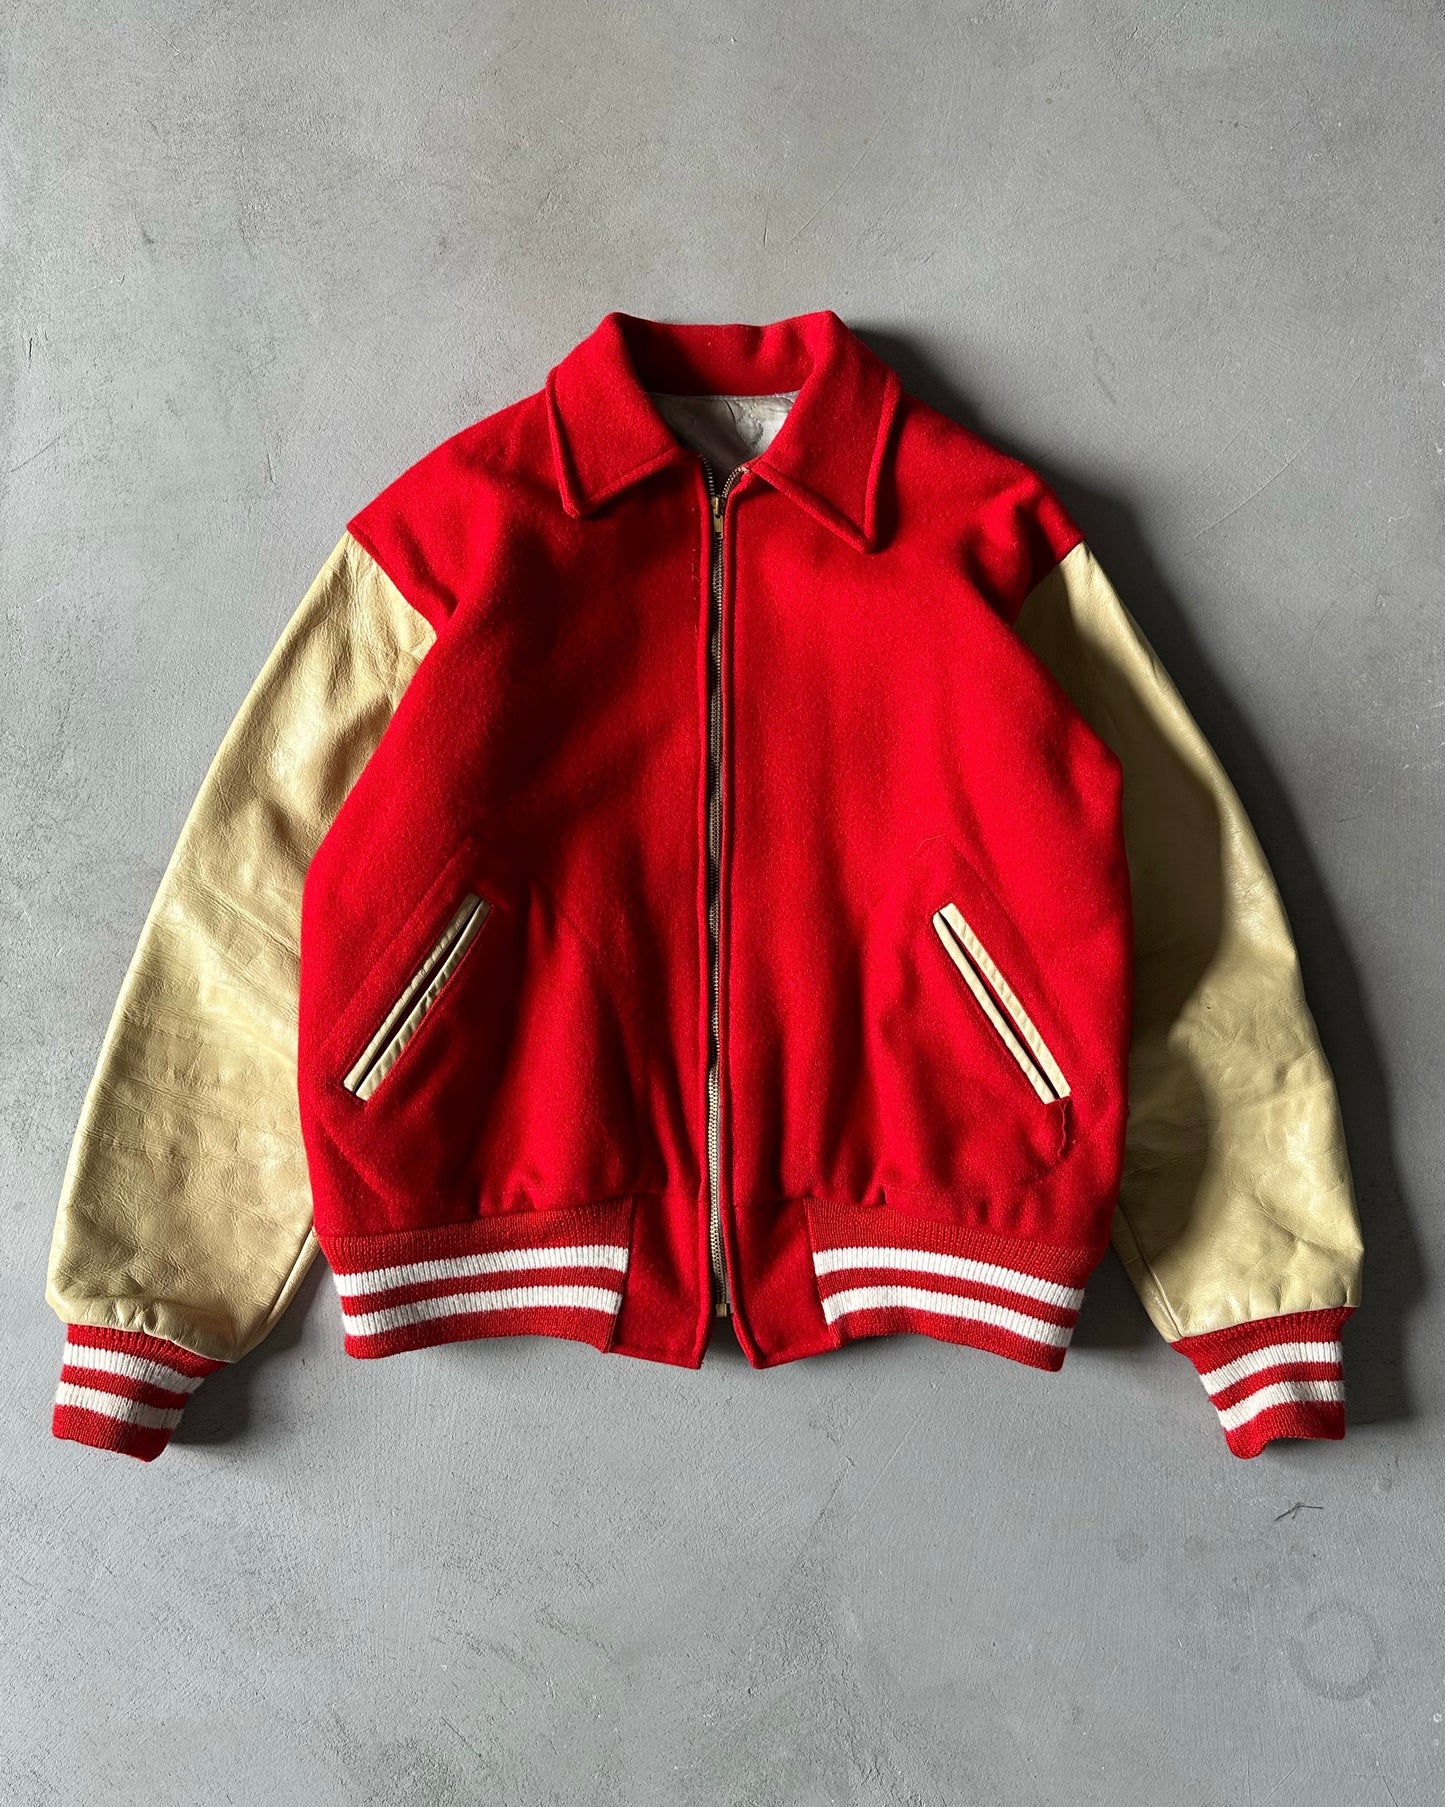 1970s - Red/Beige "St. Joseph" Varsity Jacket - L